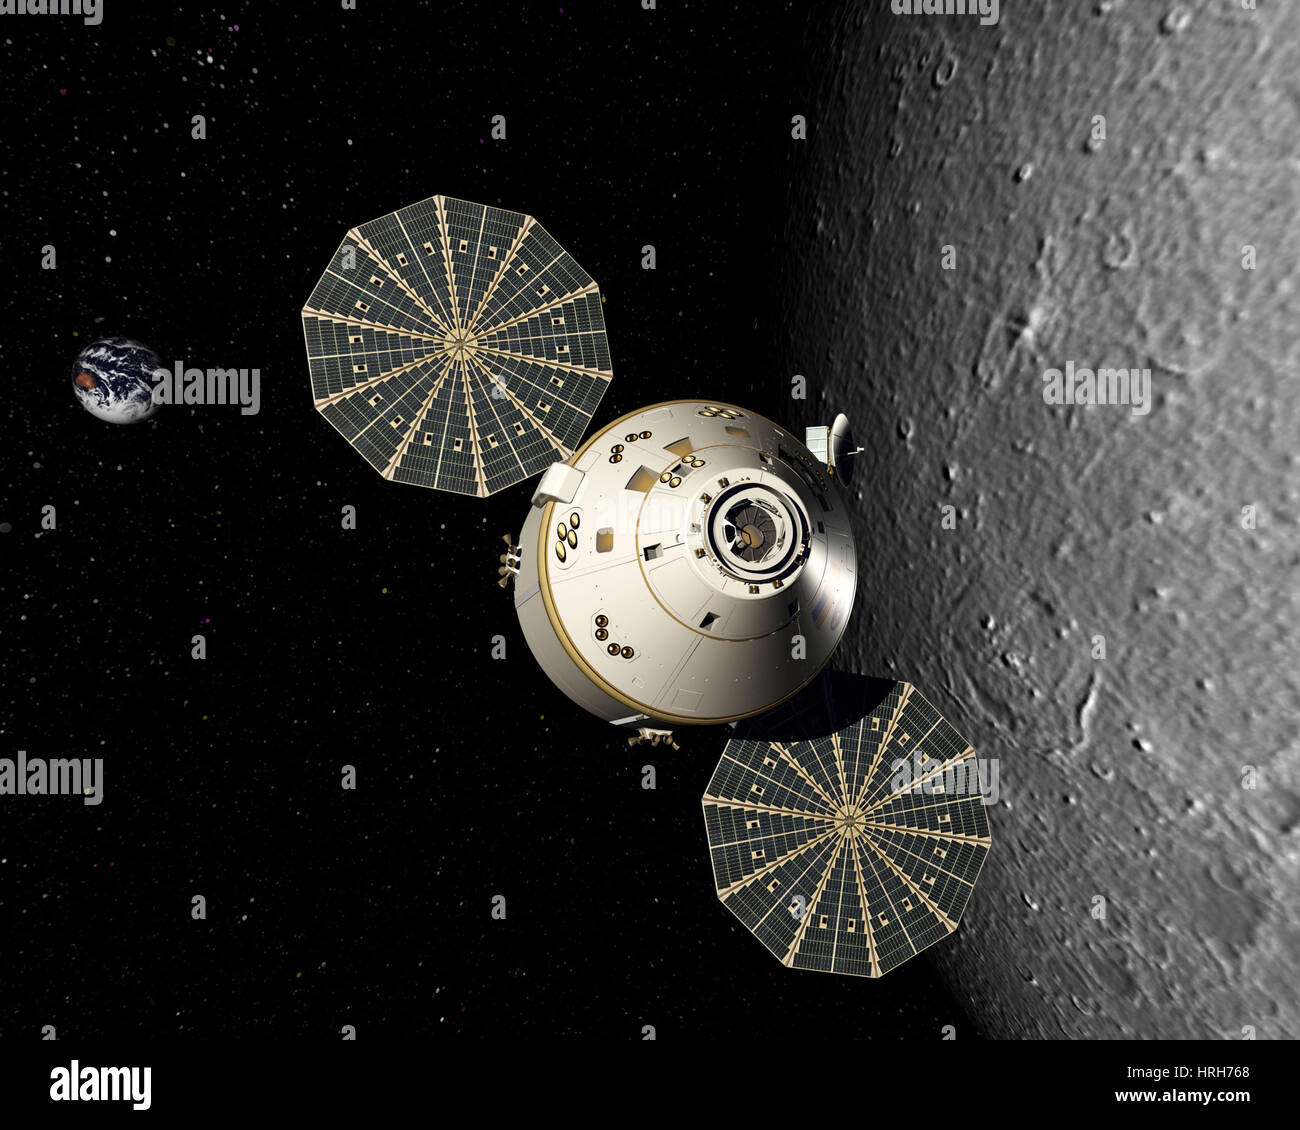 Orion spacecraft Stock Photo